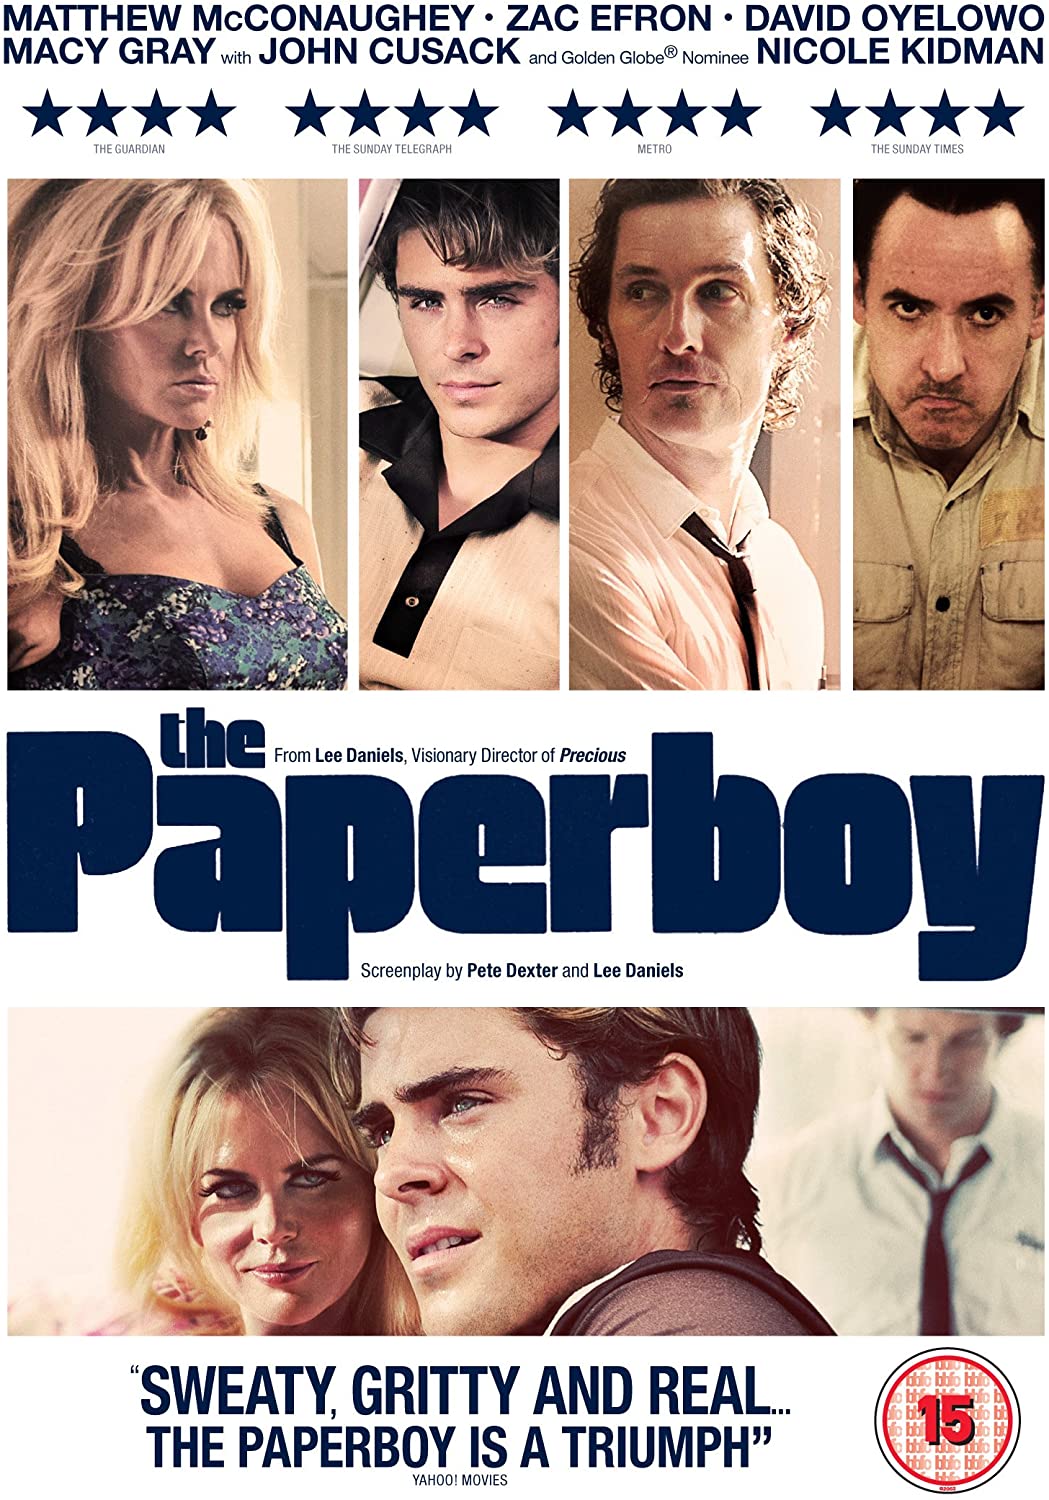 The Paperboy (2012) - Drama/Thriller [DVD]